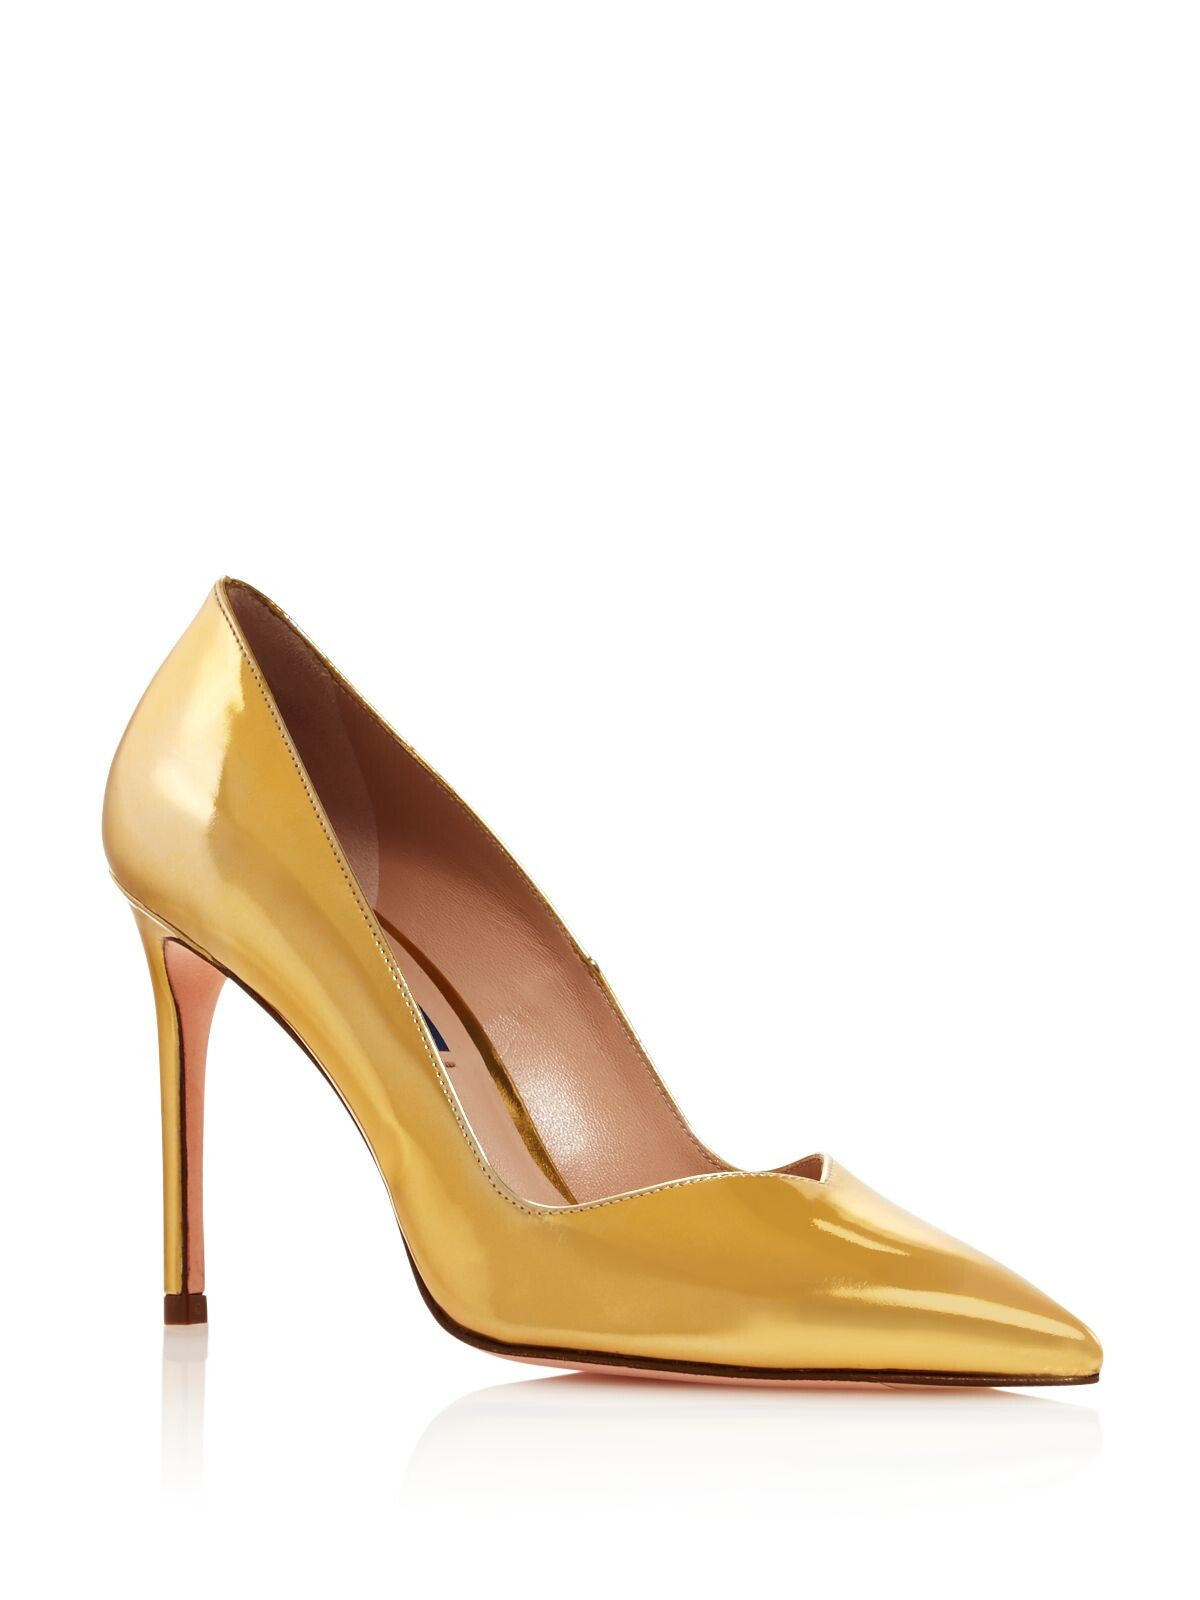 STUART WEITZMAN Womens Gold Metallic Anny Pointed Toe Stiletto Slip On Leather Dress Pumps Shoes 10 M